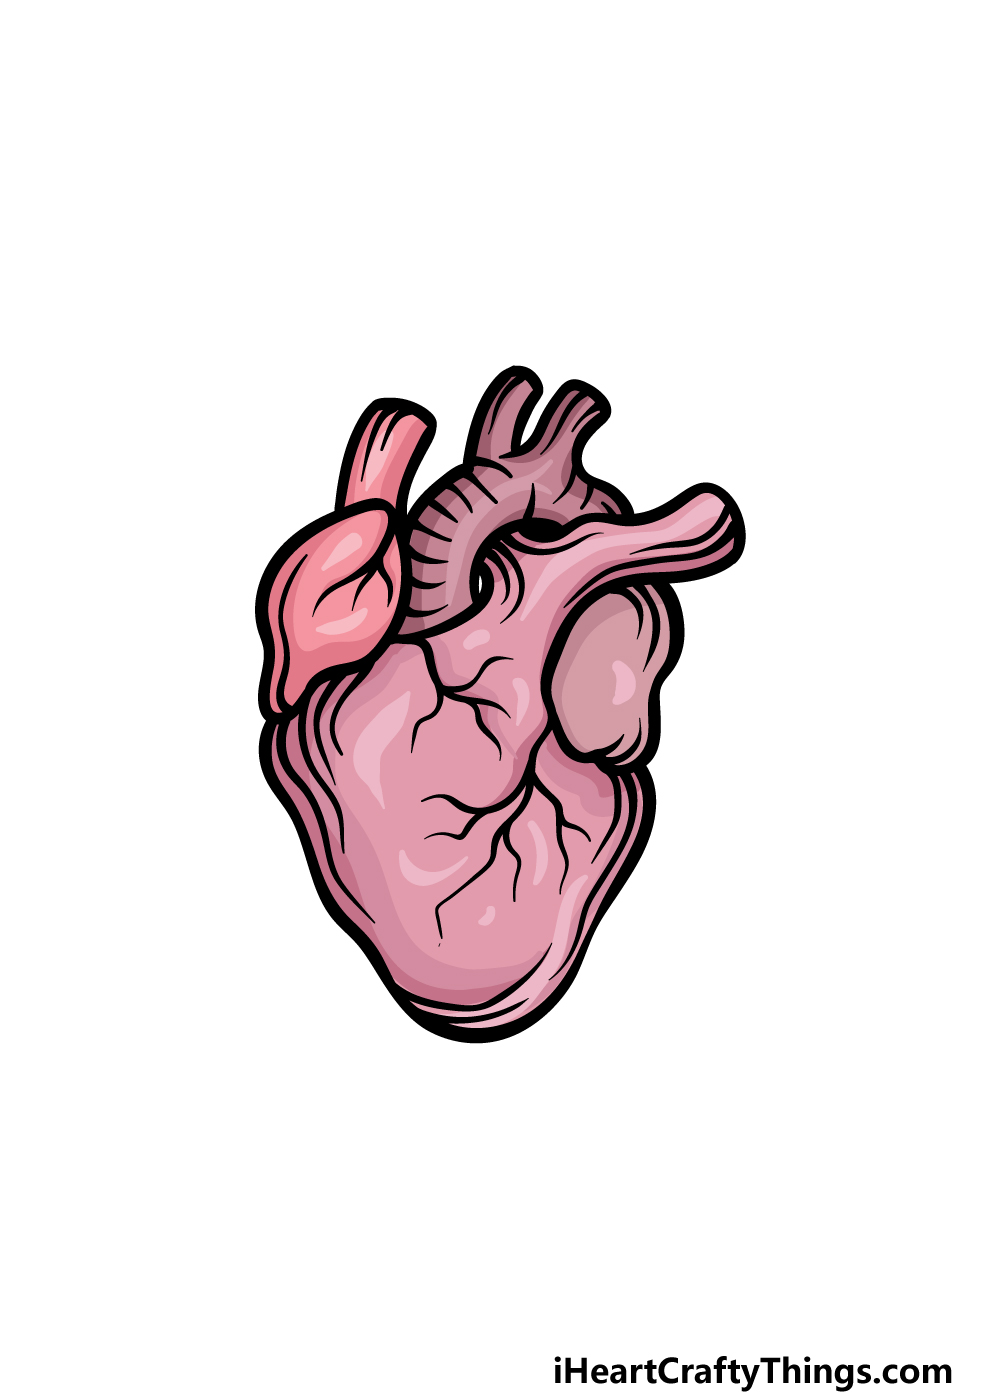 How to draw human heart diagram easily/ Human heart diagram drawing -  YouTube-saigonsouth.com.vn